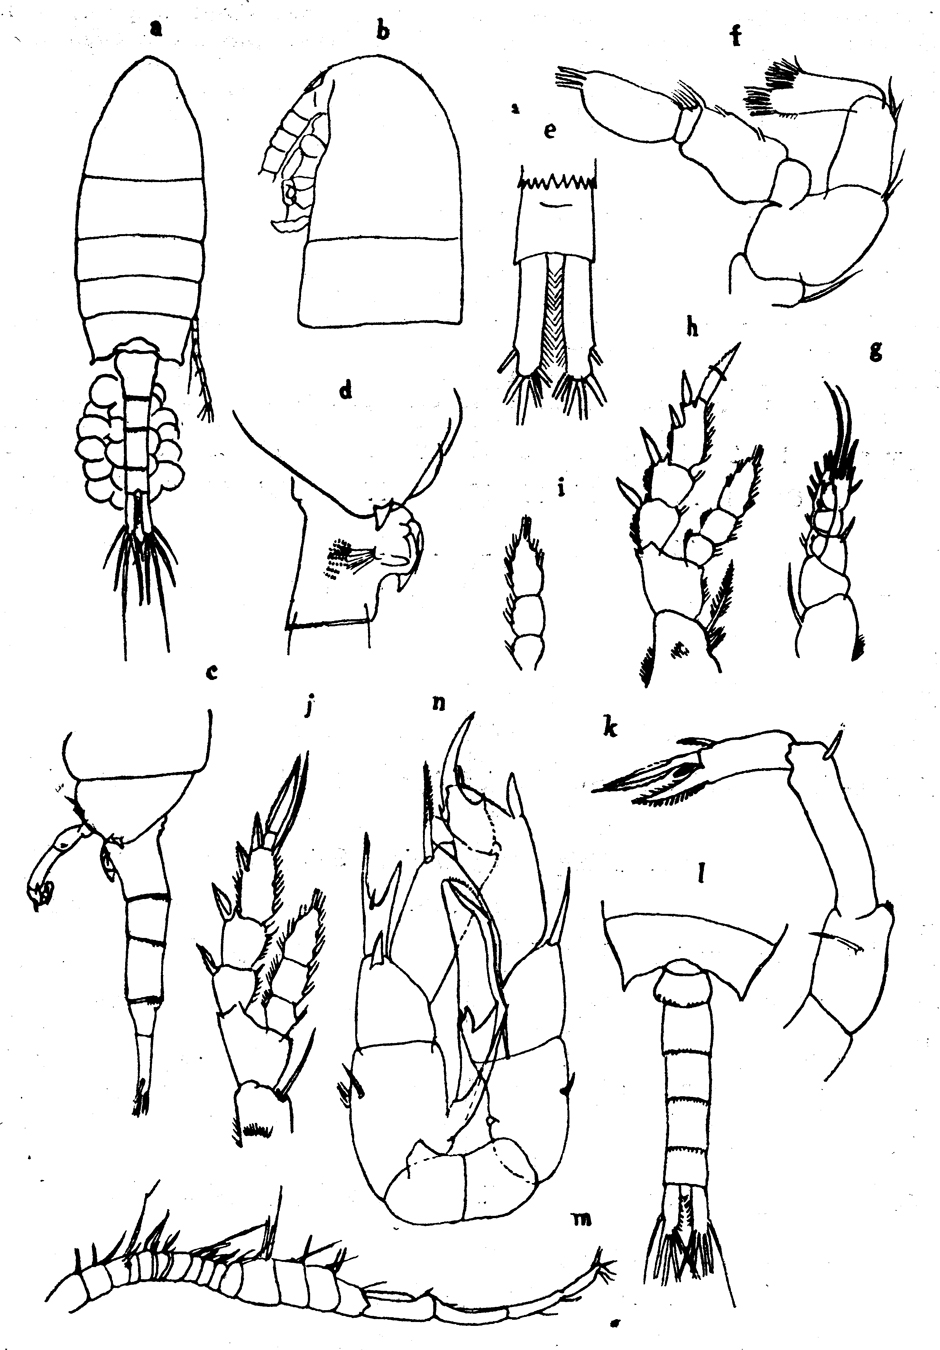 Species Pseudodiaptomus marinus - Plate 10 of morphological figures